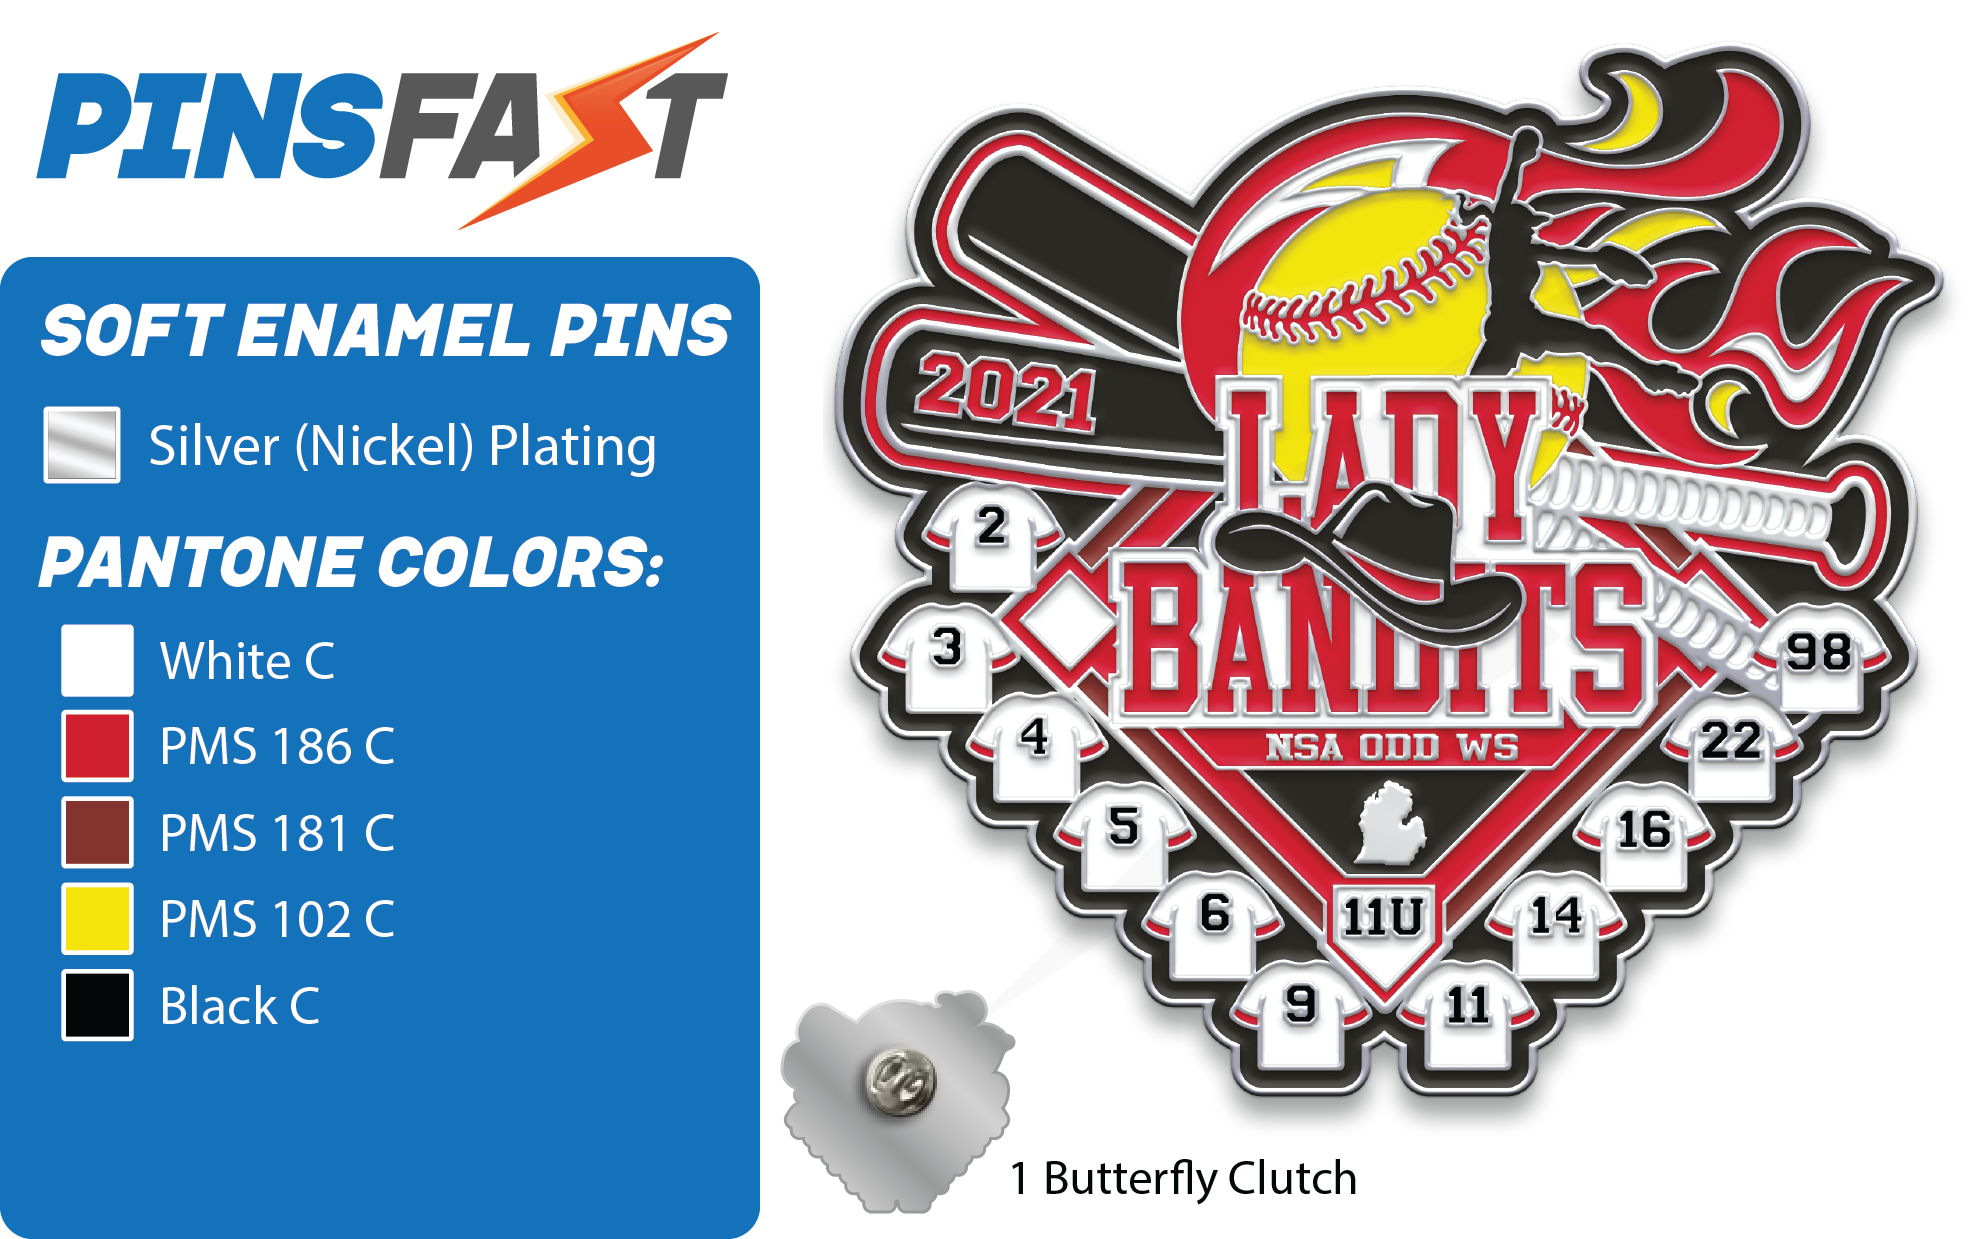 Lady Bandits softball trading pins